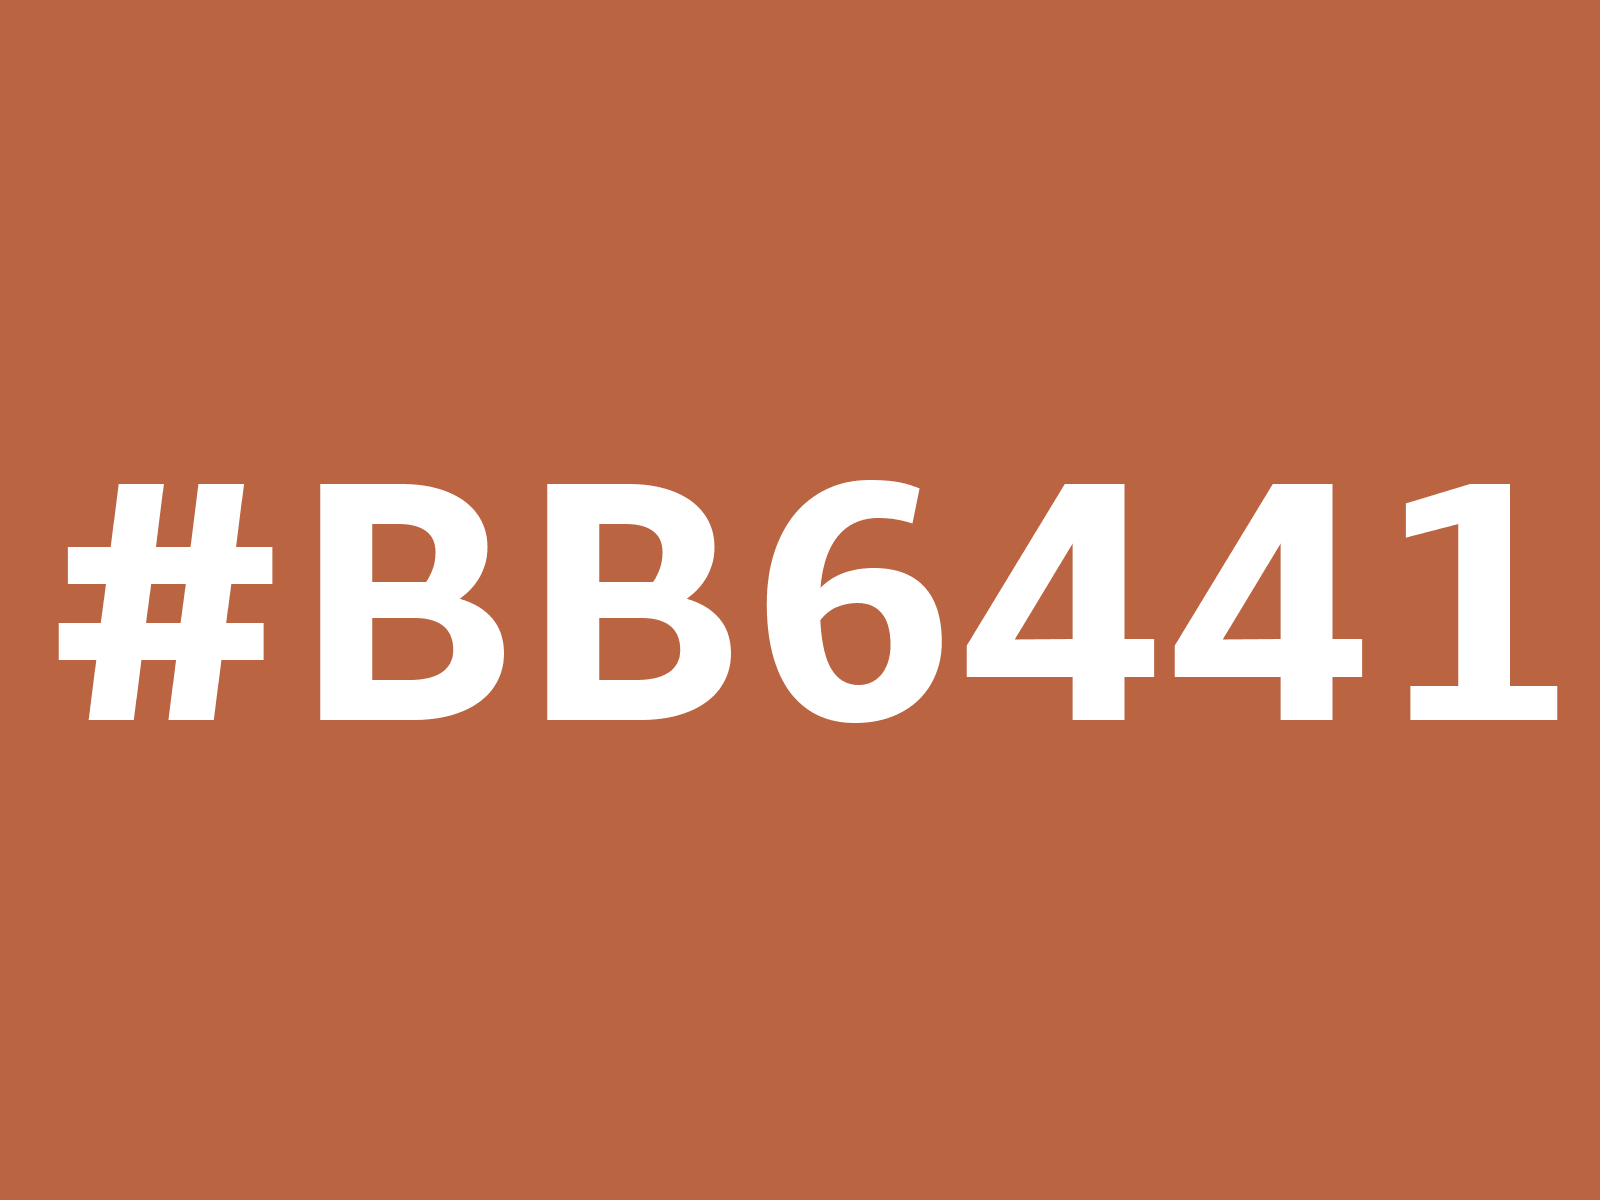 bb6441